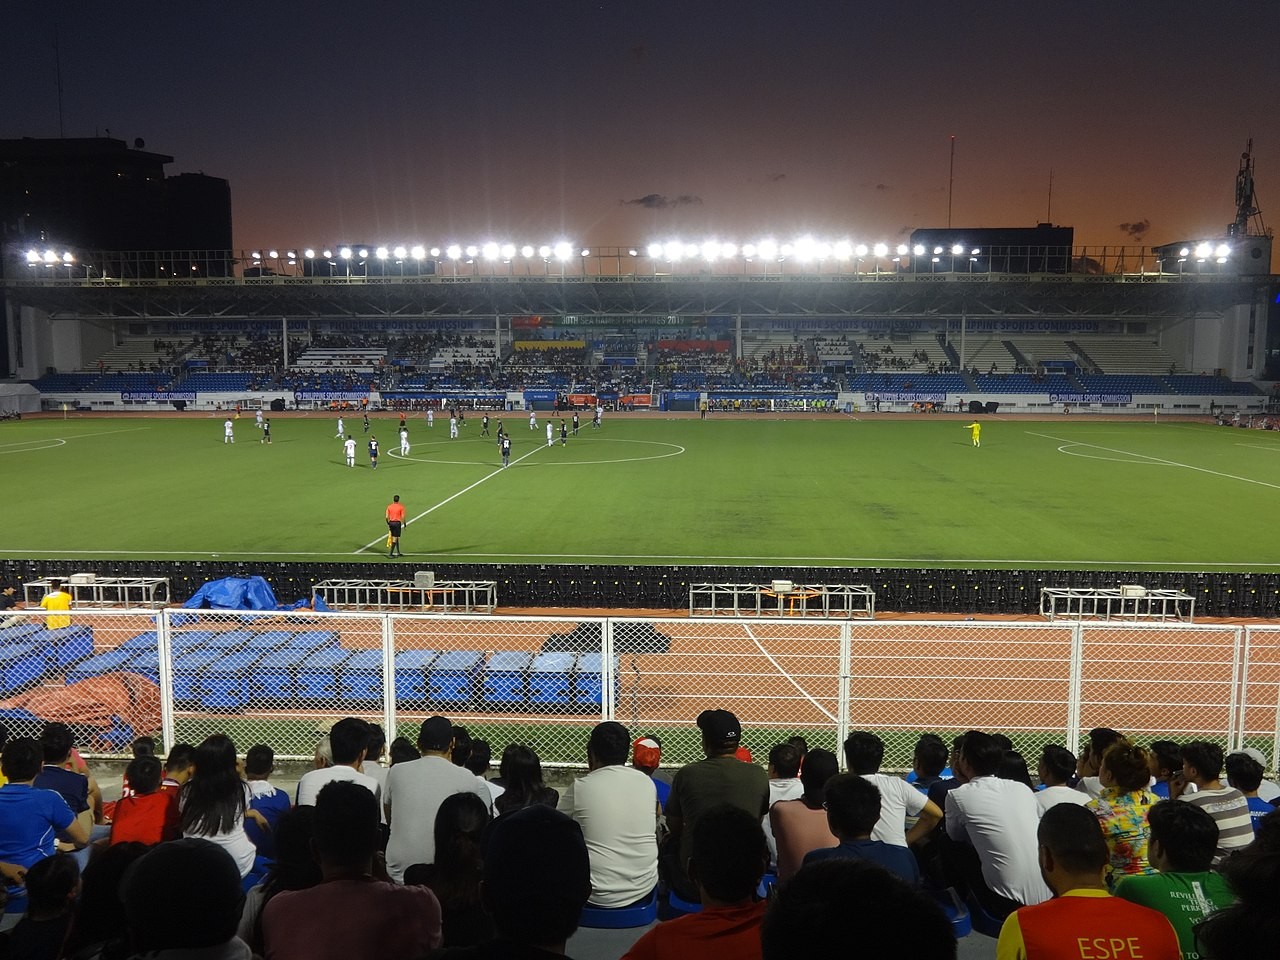 rizal-memorial-football-stadium-field-view-from-bleachers-malate-manila-11-27-2019-1697605614.jpg